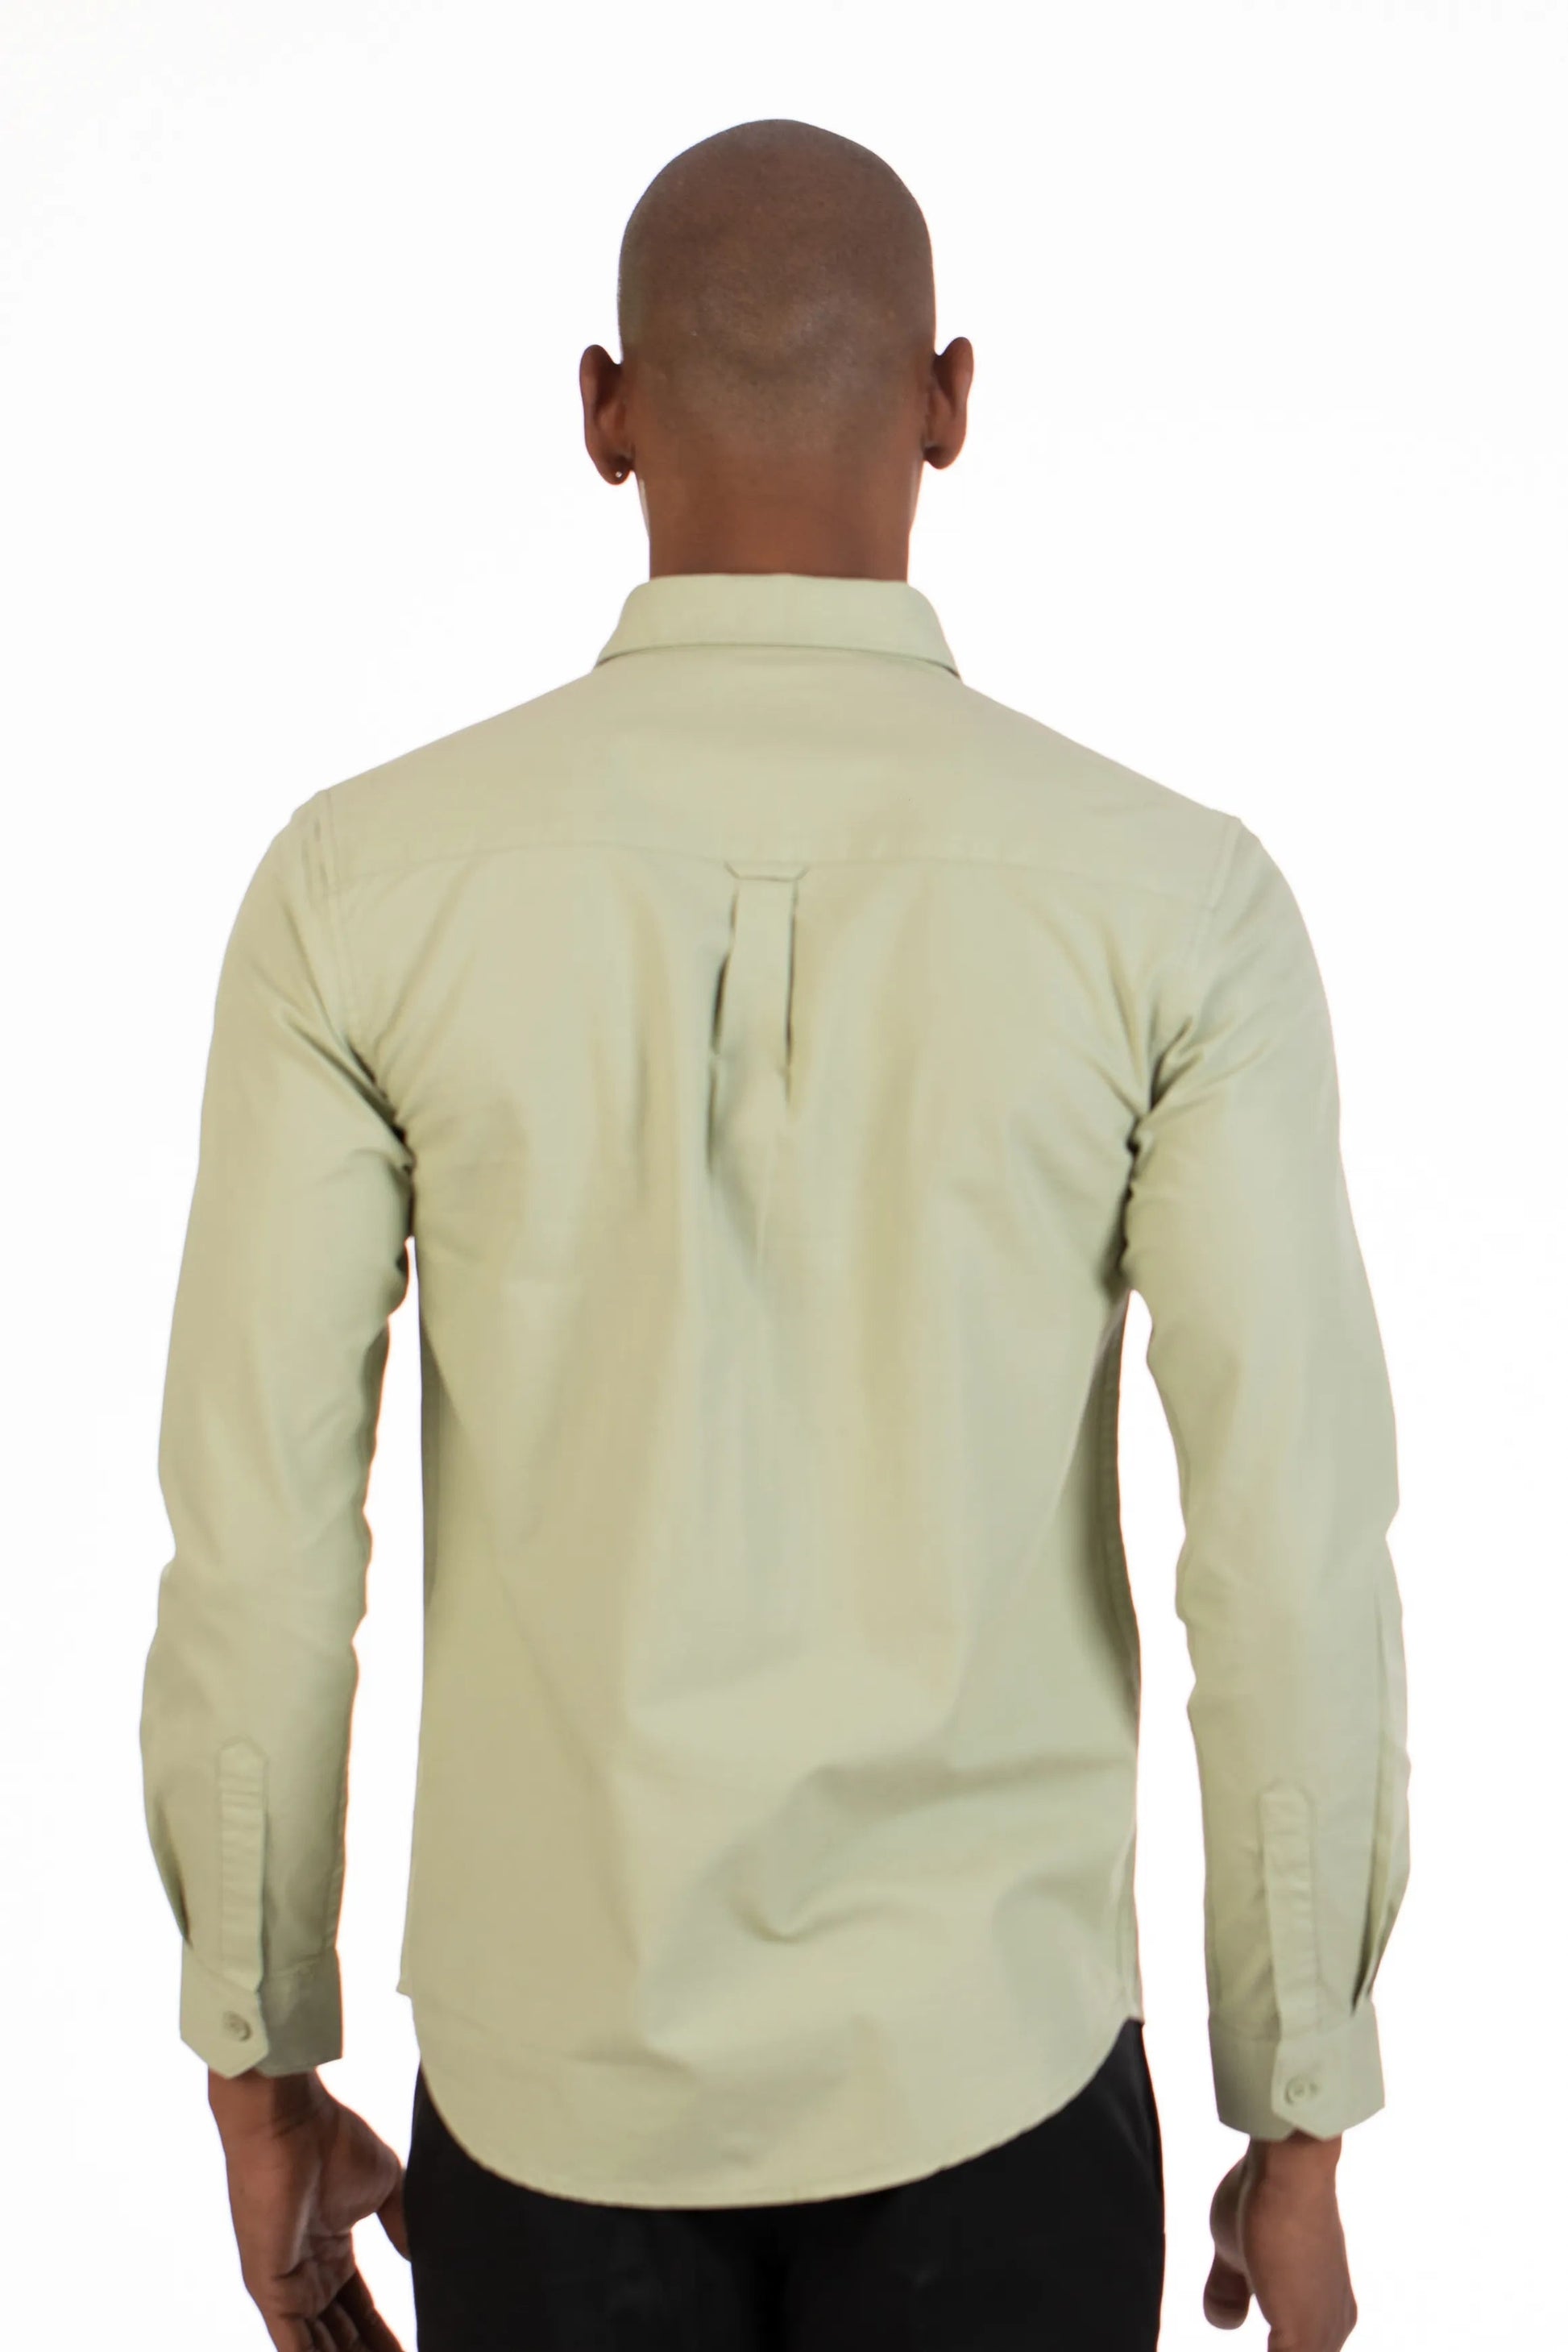 Buy Single Pocket Plain Oxford Shirt Online.